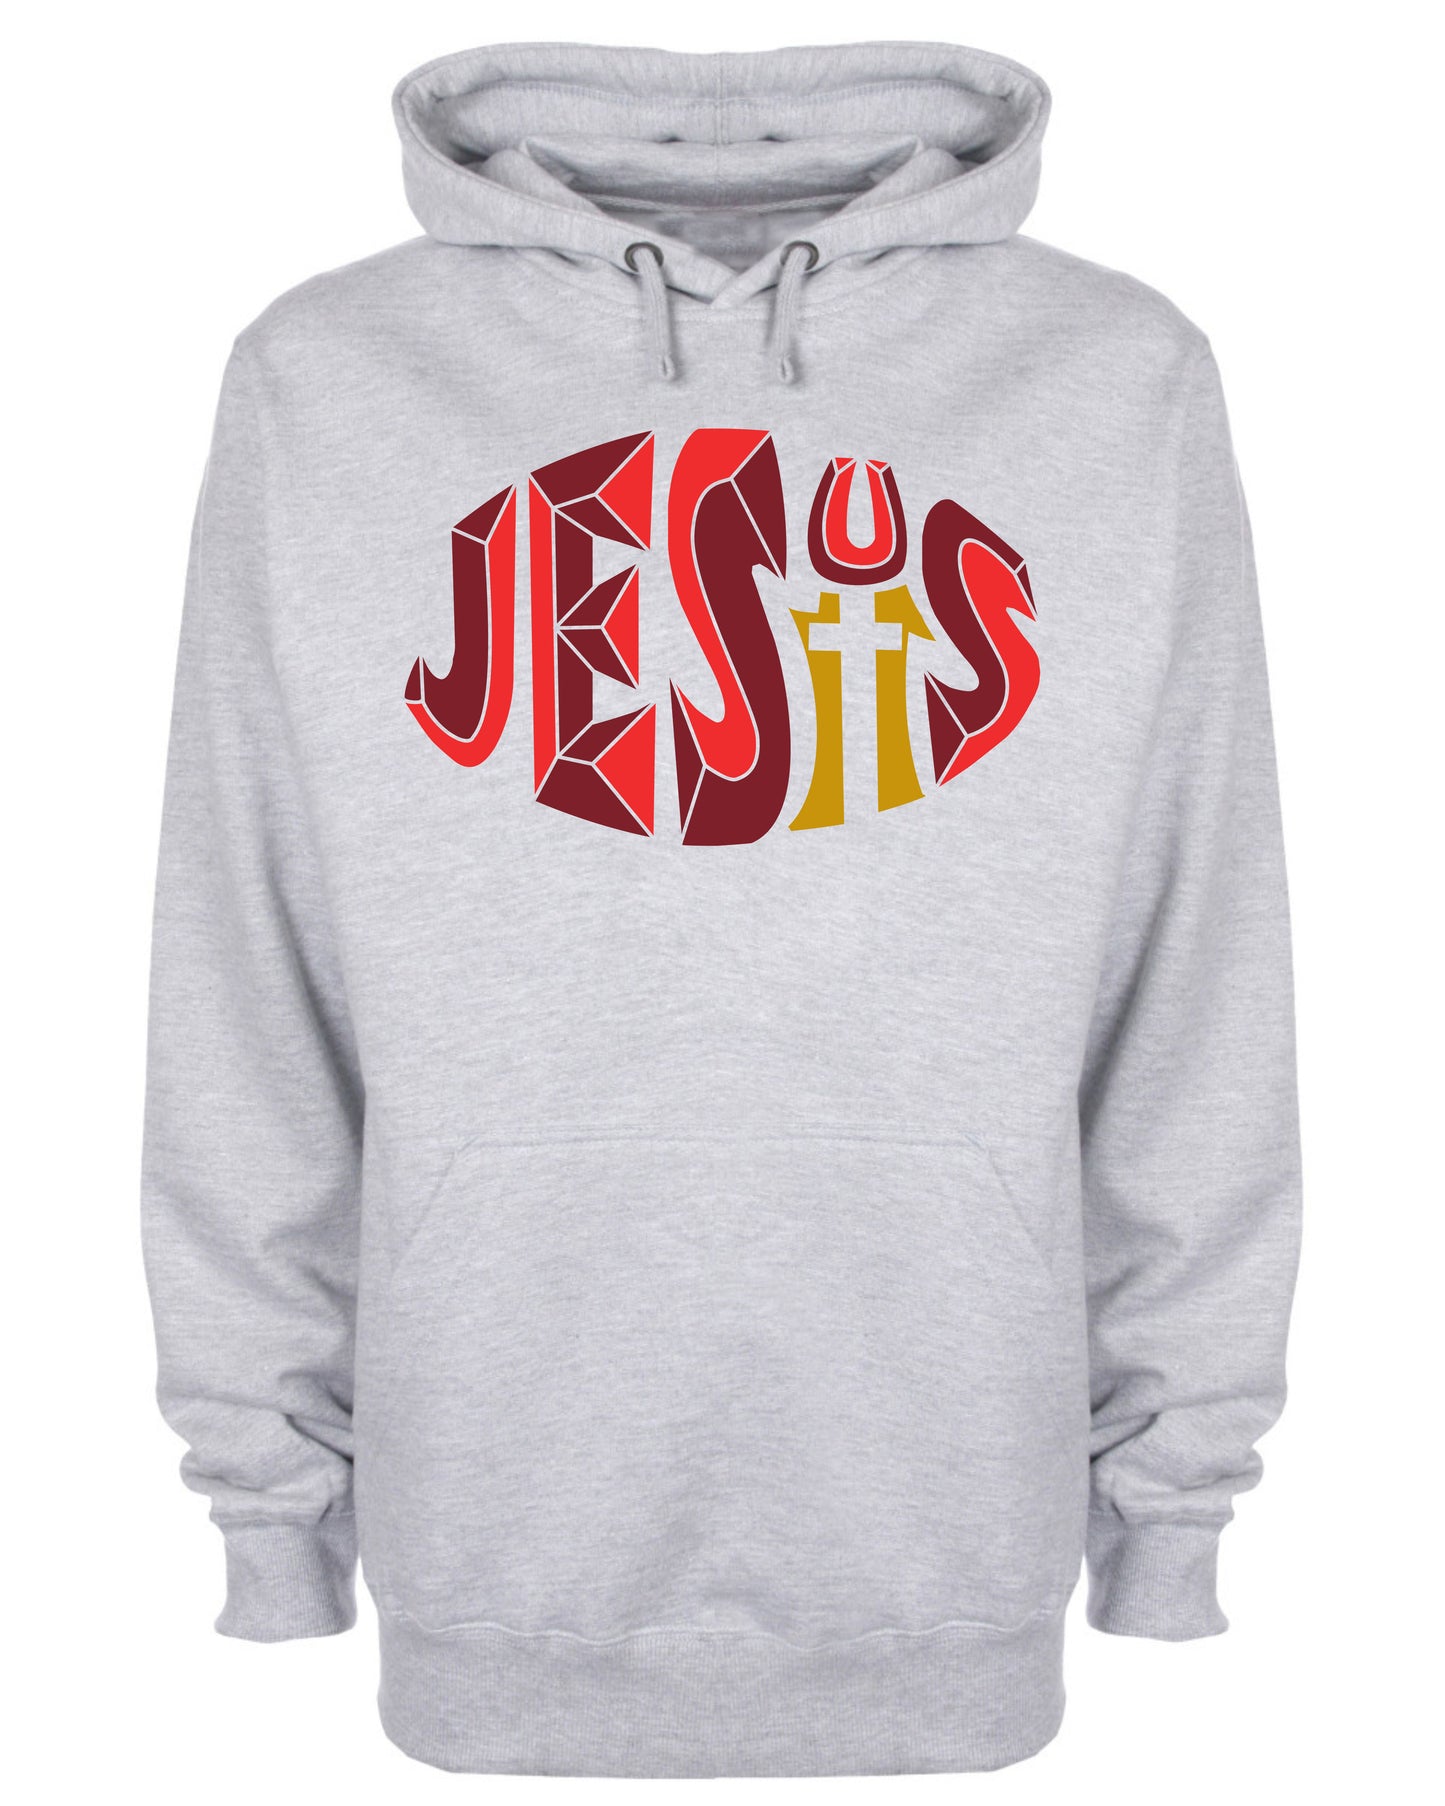 Jesus Hoodie Christian Cross Christ Sweatshirt